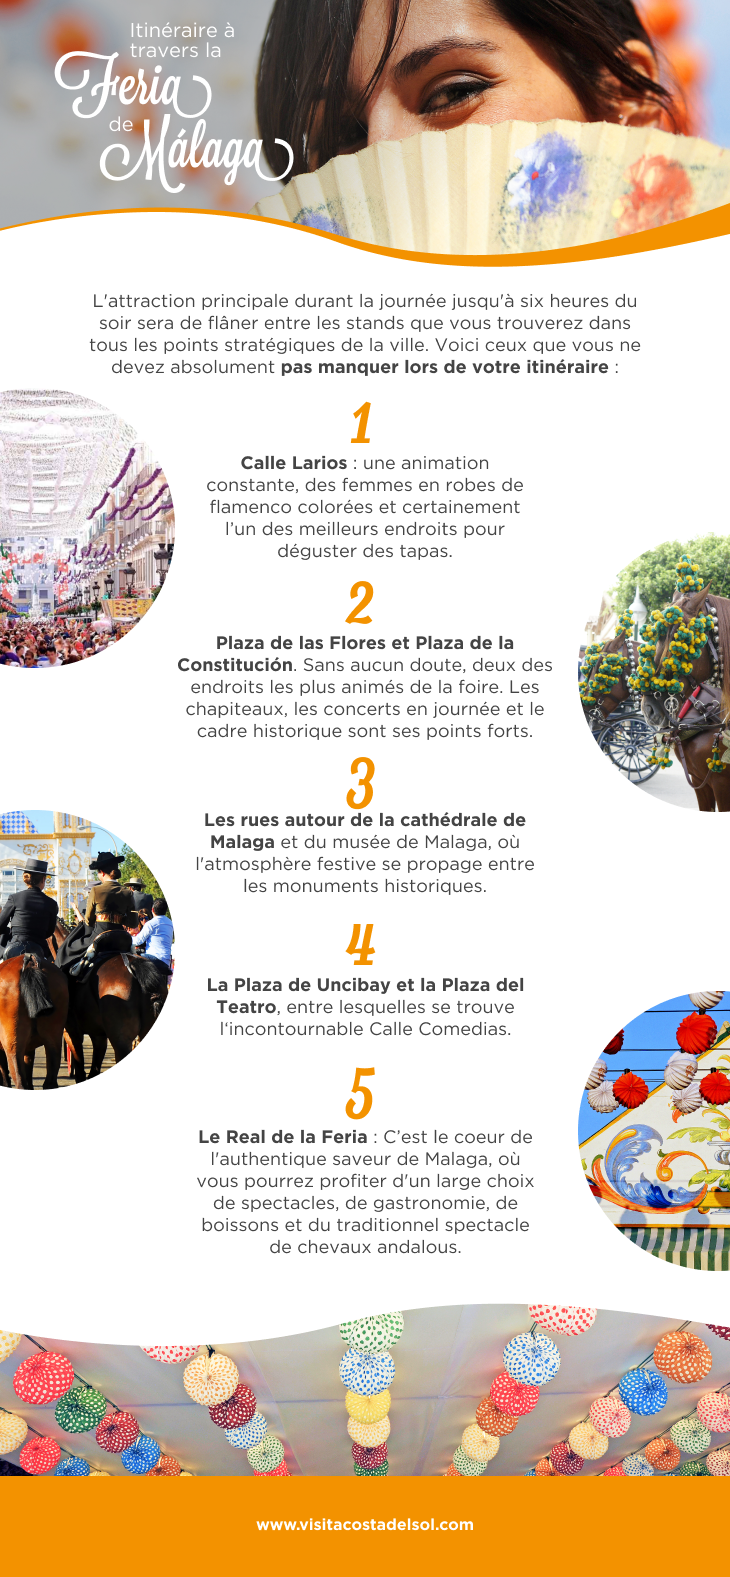 csol_infografia_8_Feria de malaga FR